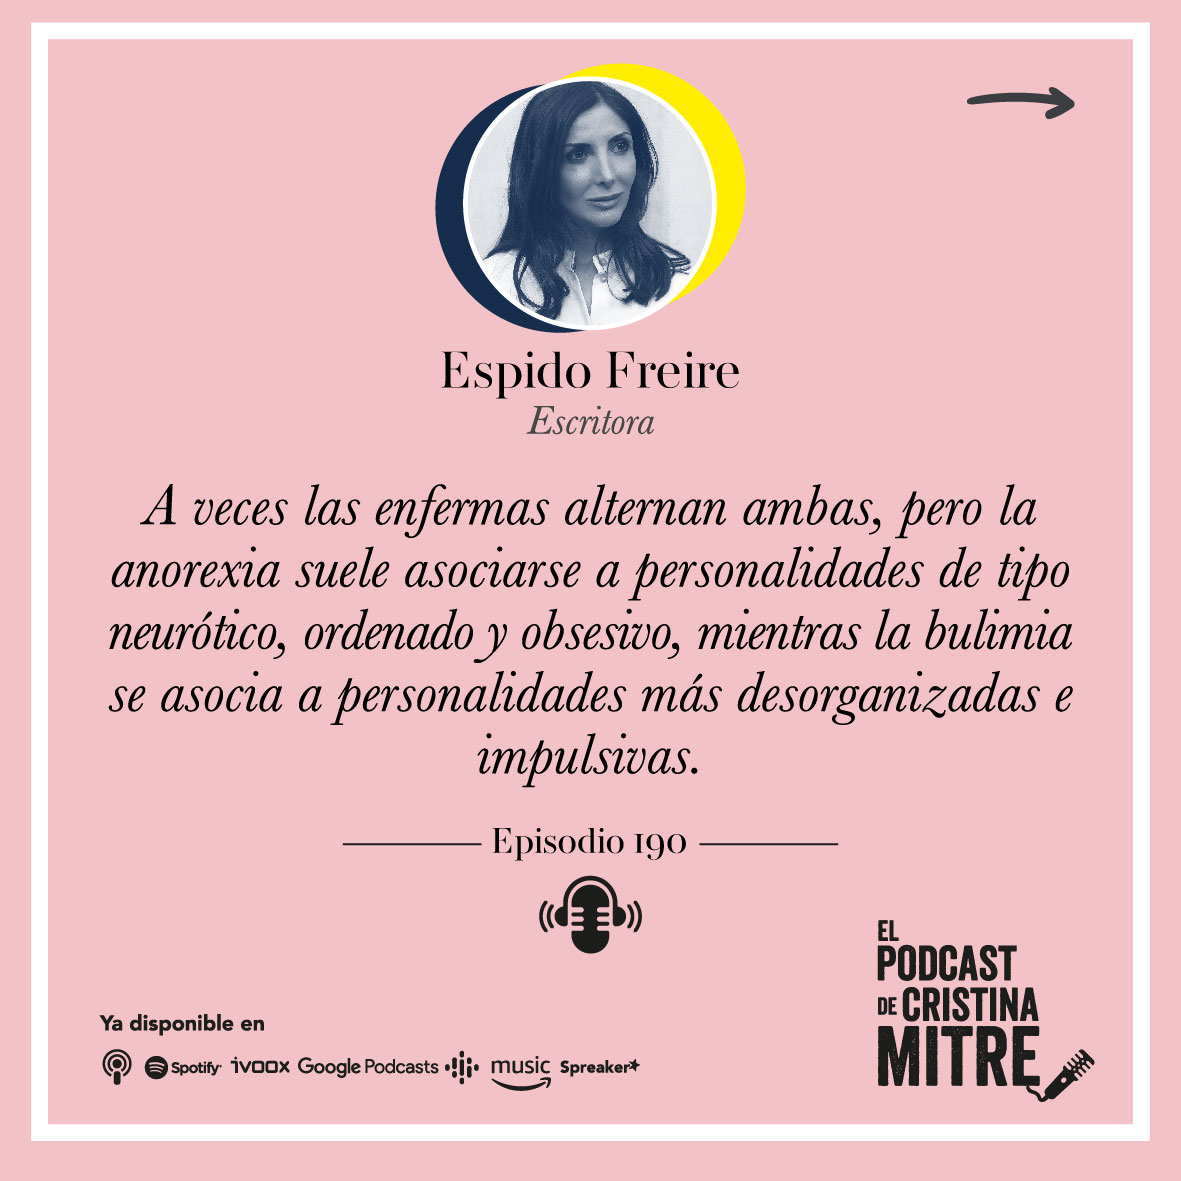 El podcast de Cristina Mitre Espido Freire anorexia bulimia